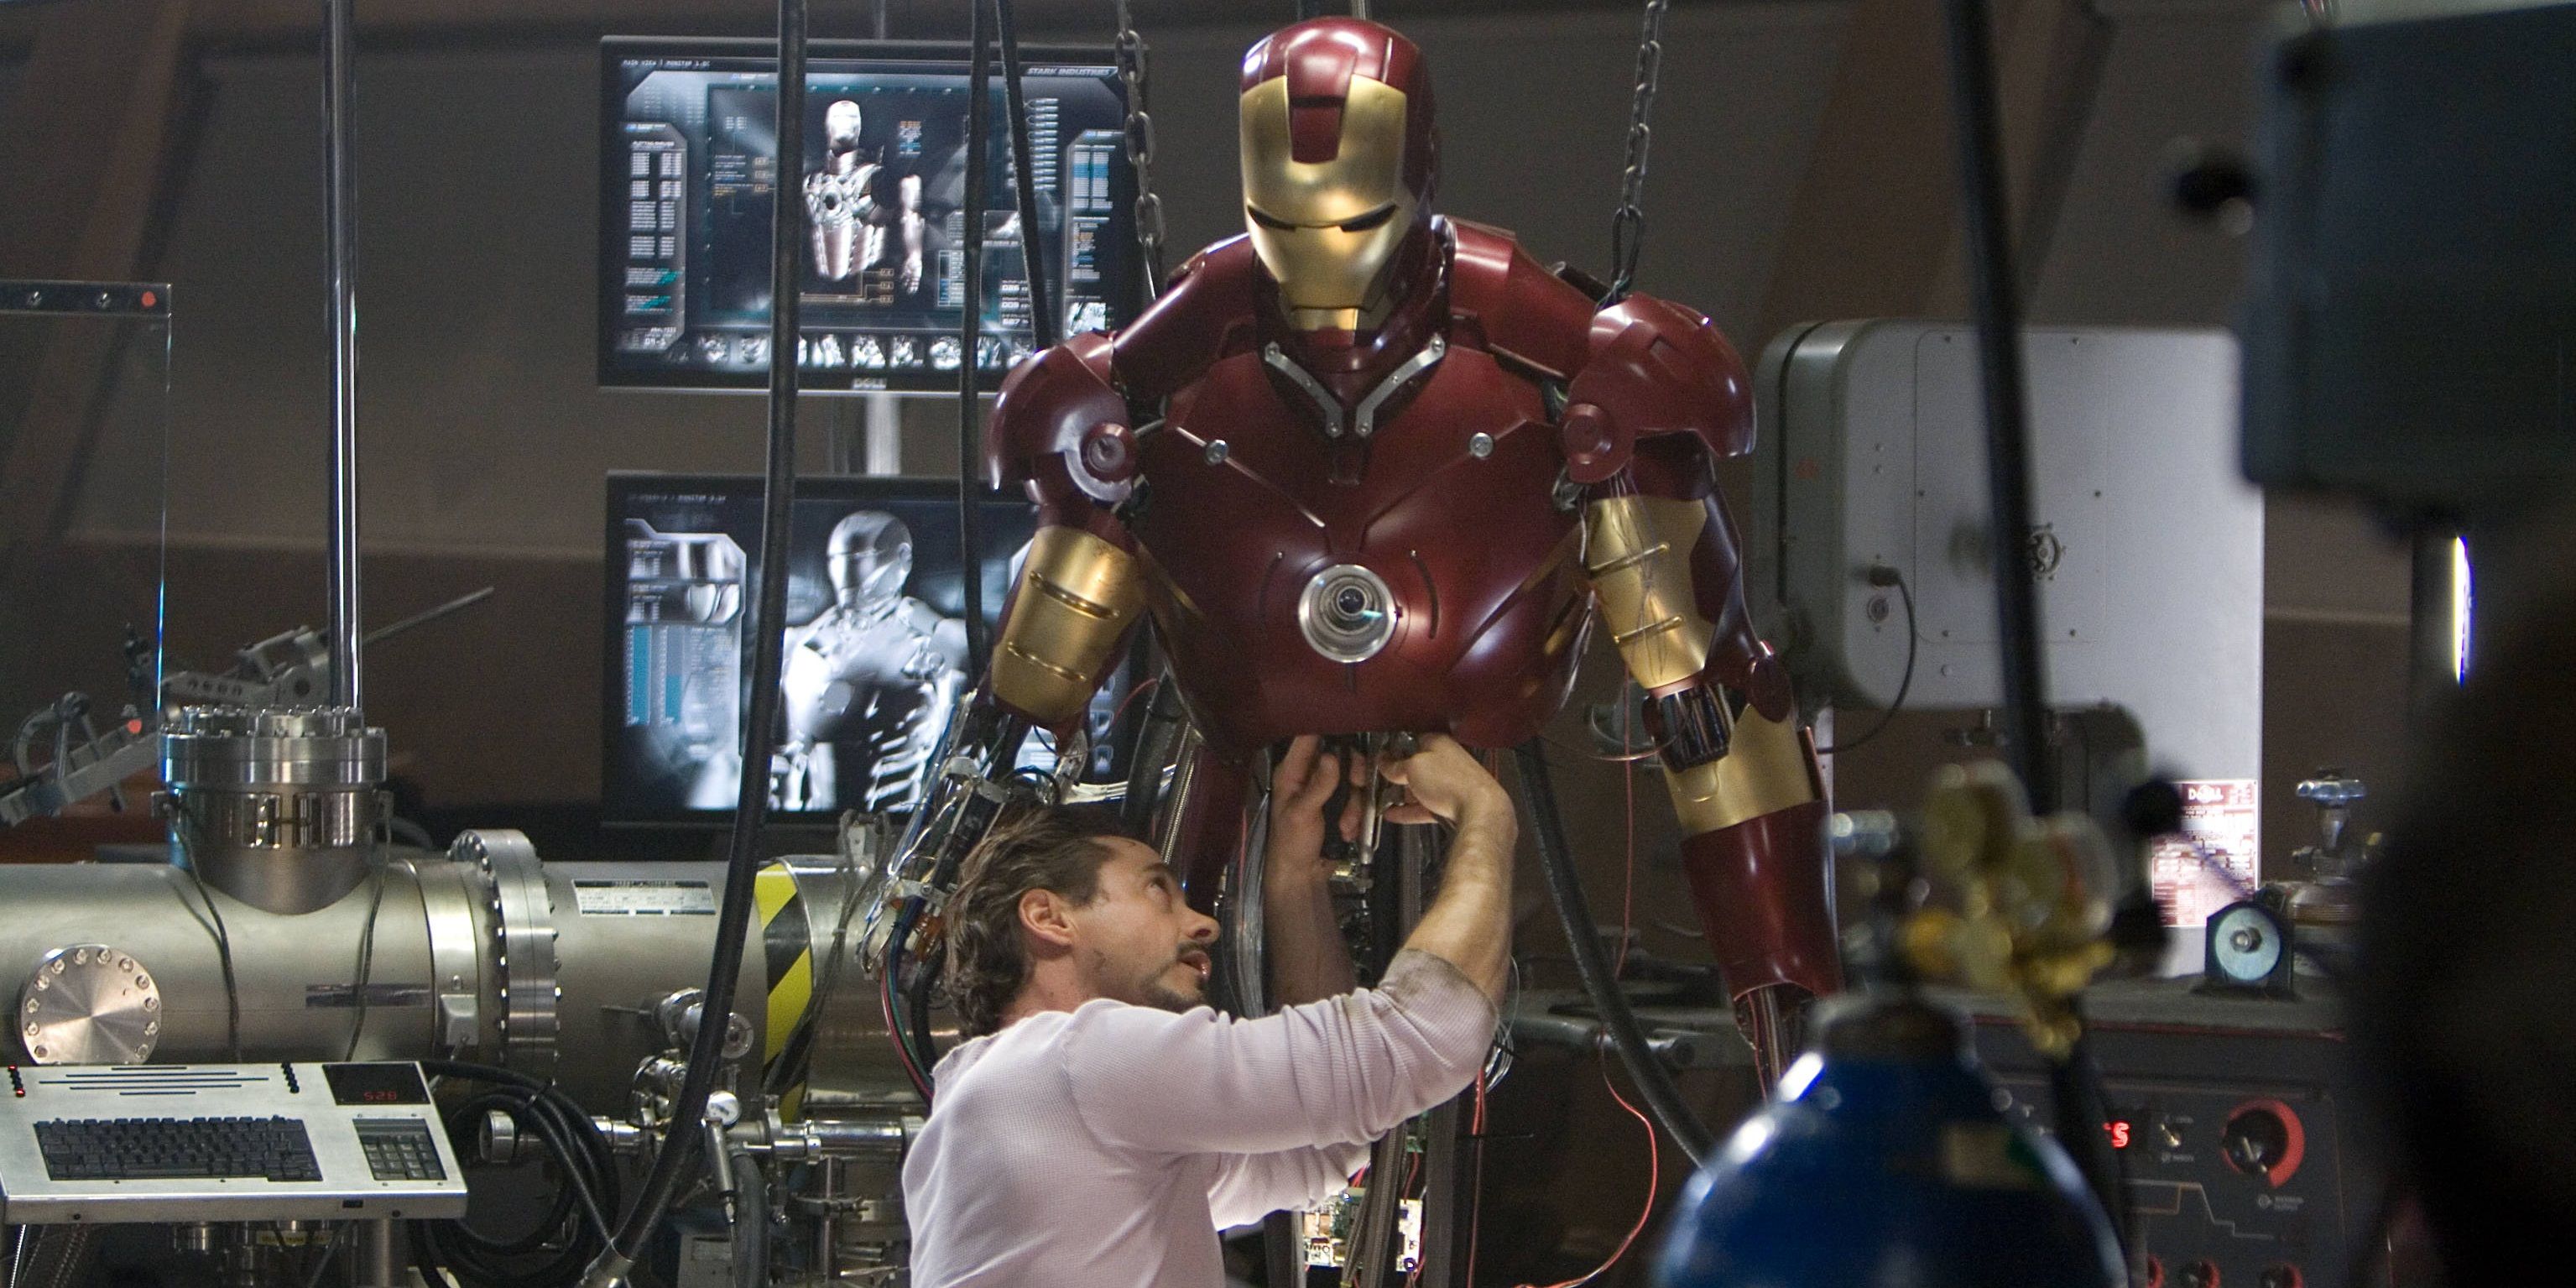 Tony working on his Iron Man suit